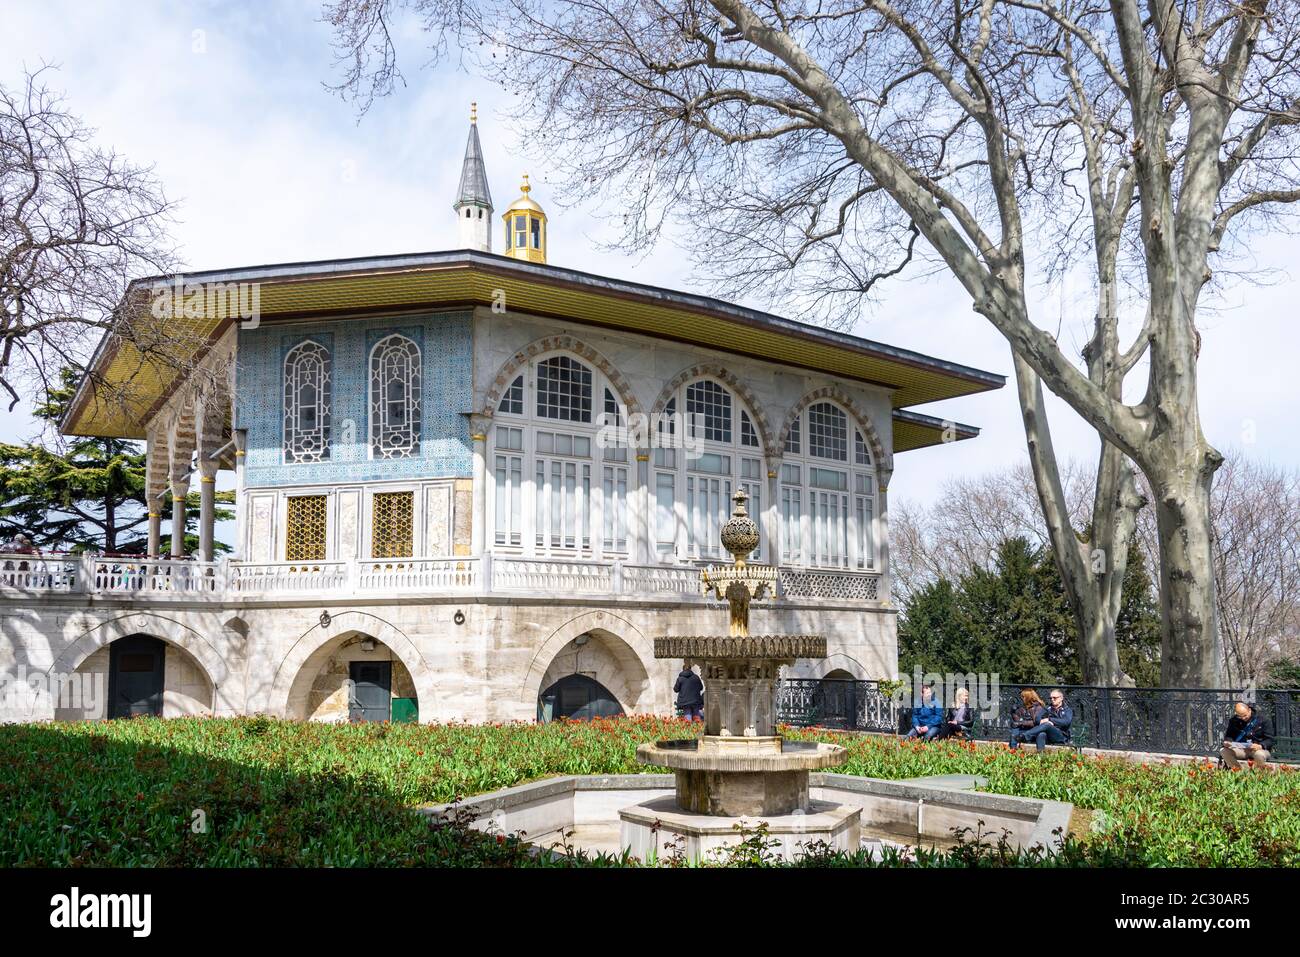 Bagdad Pavilion oder Bagdad Kiosk, vierter Innenhof, Topkapi Palast, Topkapi Seraglio, Topkapi Sarayi, Sultanahmet, Istanbul, Europäischer Teil, Istanbul Stockfoto